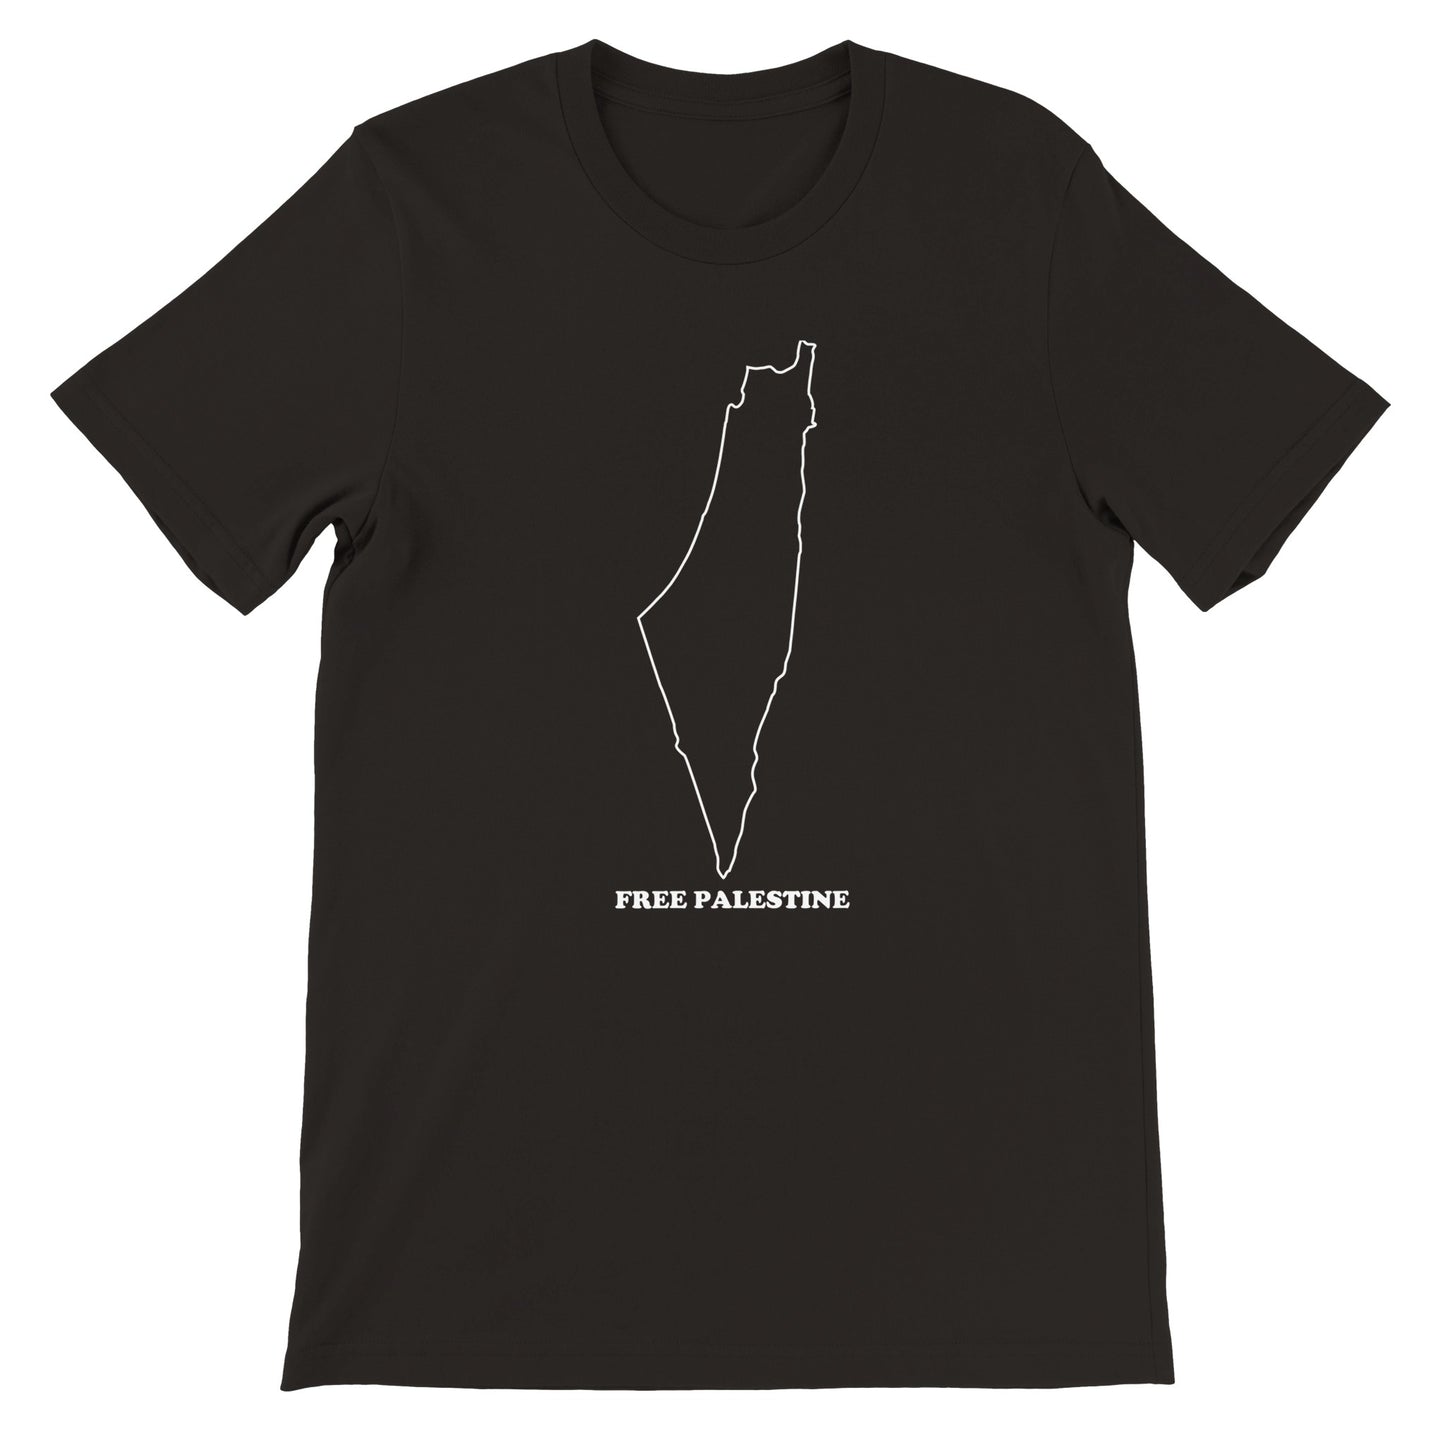 Free Palestine - Outline - Premium Unisex T-Shirt